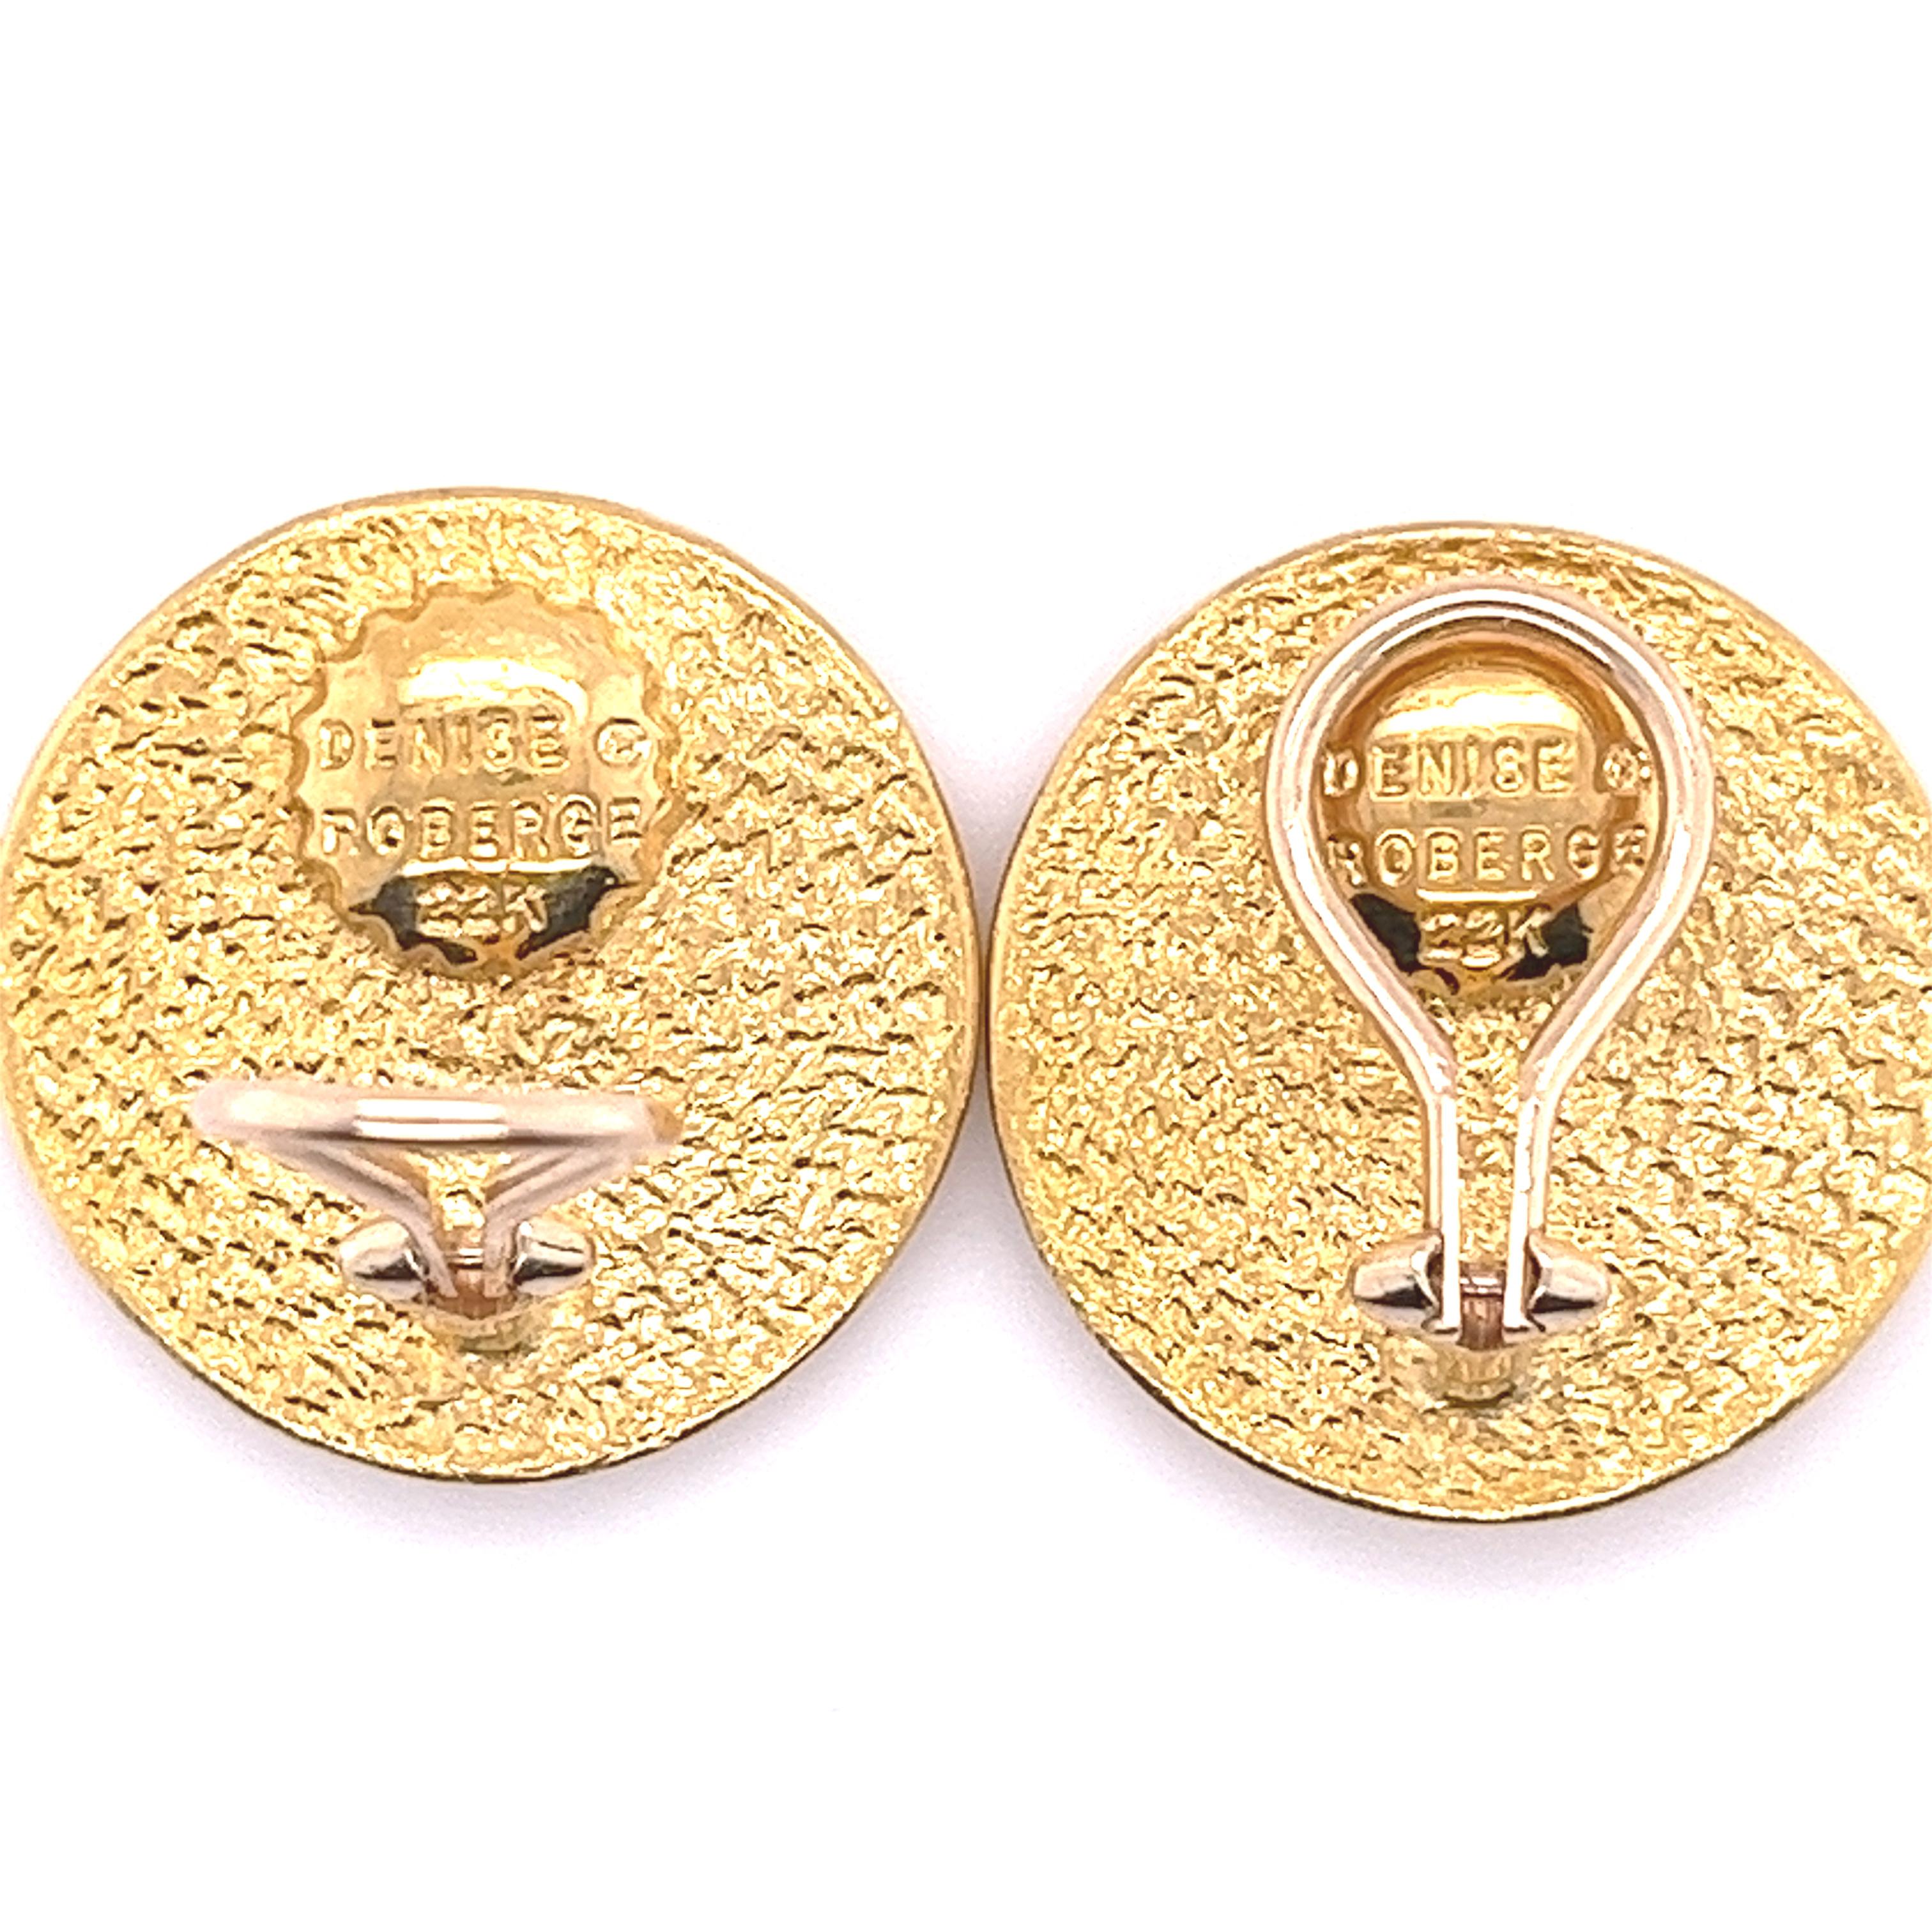 Women's Denise Roberge 22k Gold Roman Coin Motif Clip On Earrings For Sale